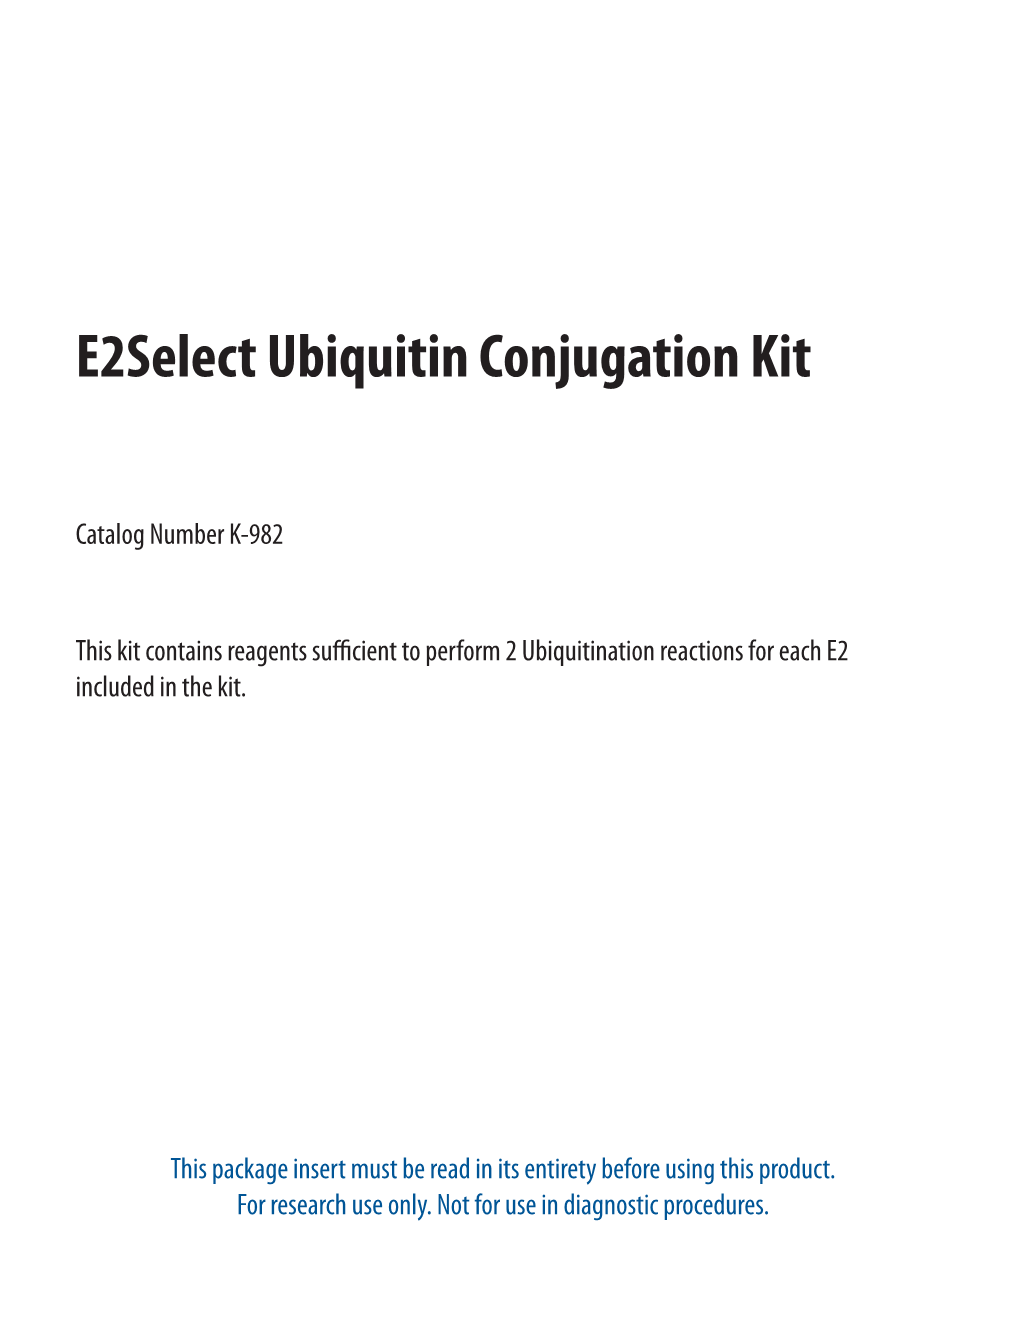 E2select Ubiquitin Conjugation Kit